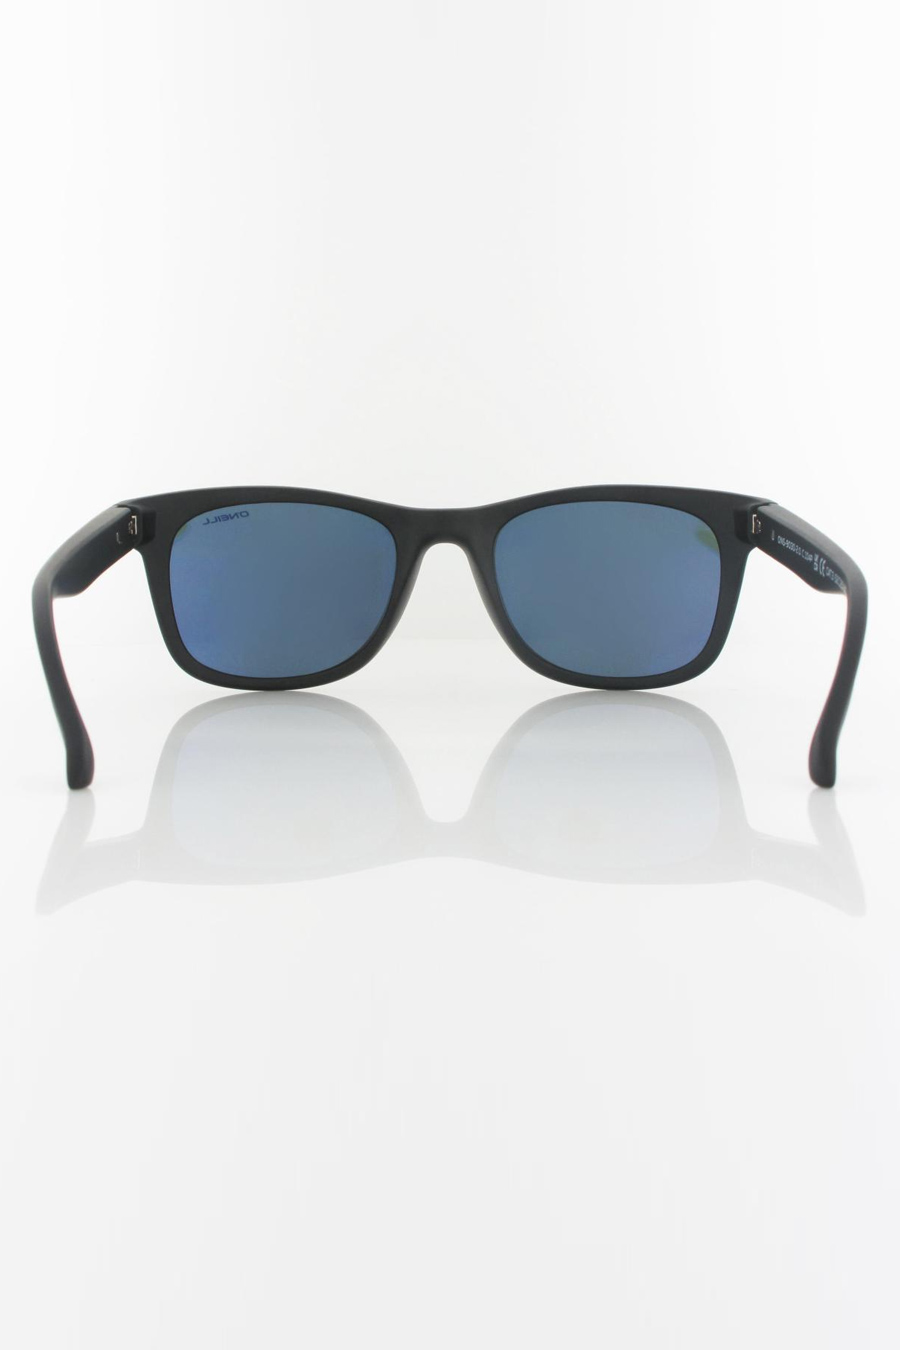 Sunglasses ONEILL ONS-9030-20-104P